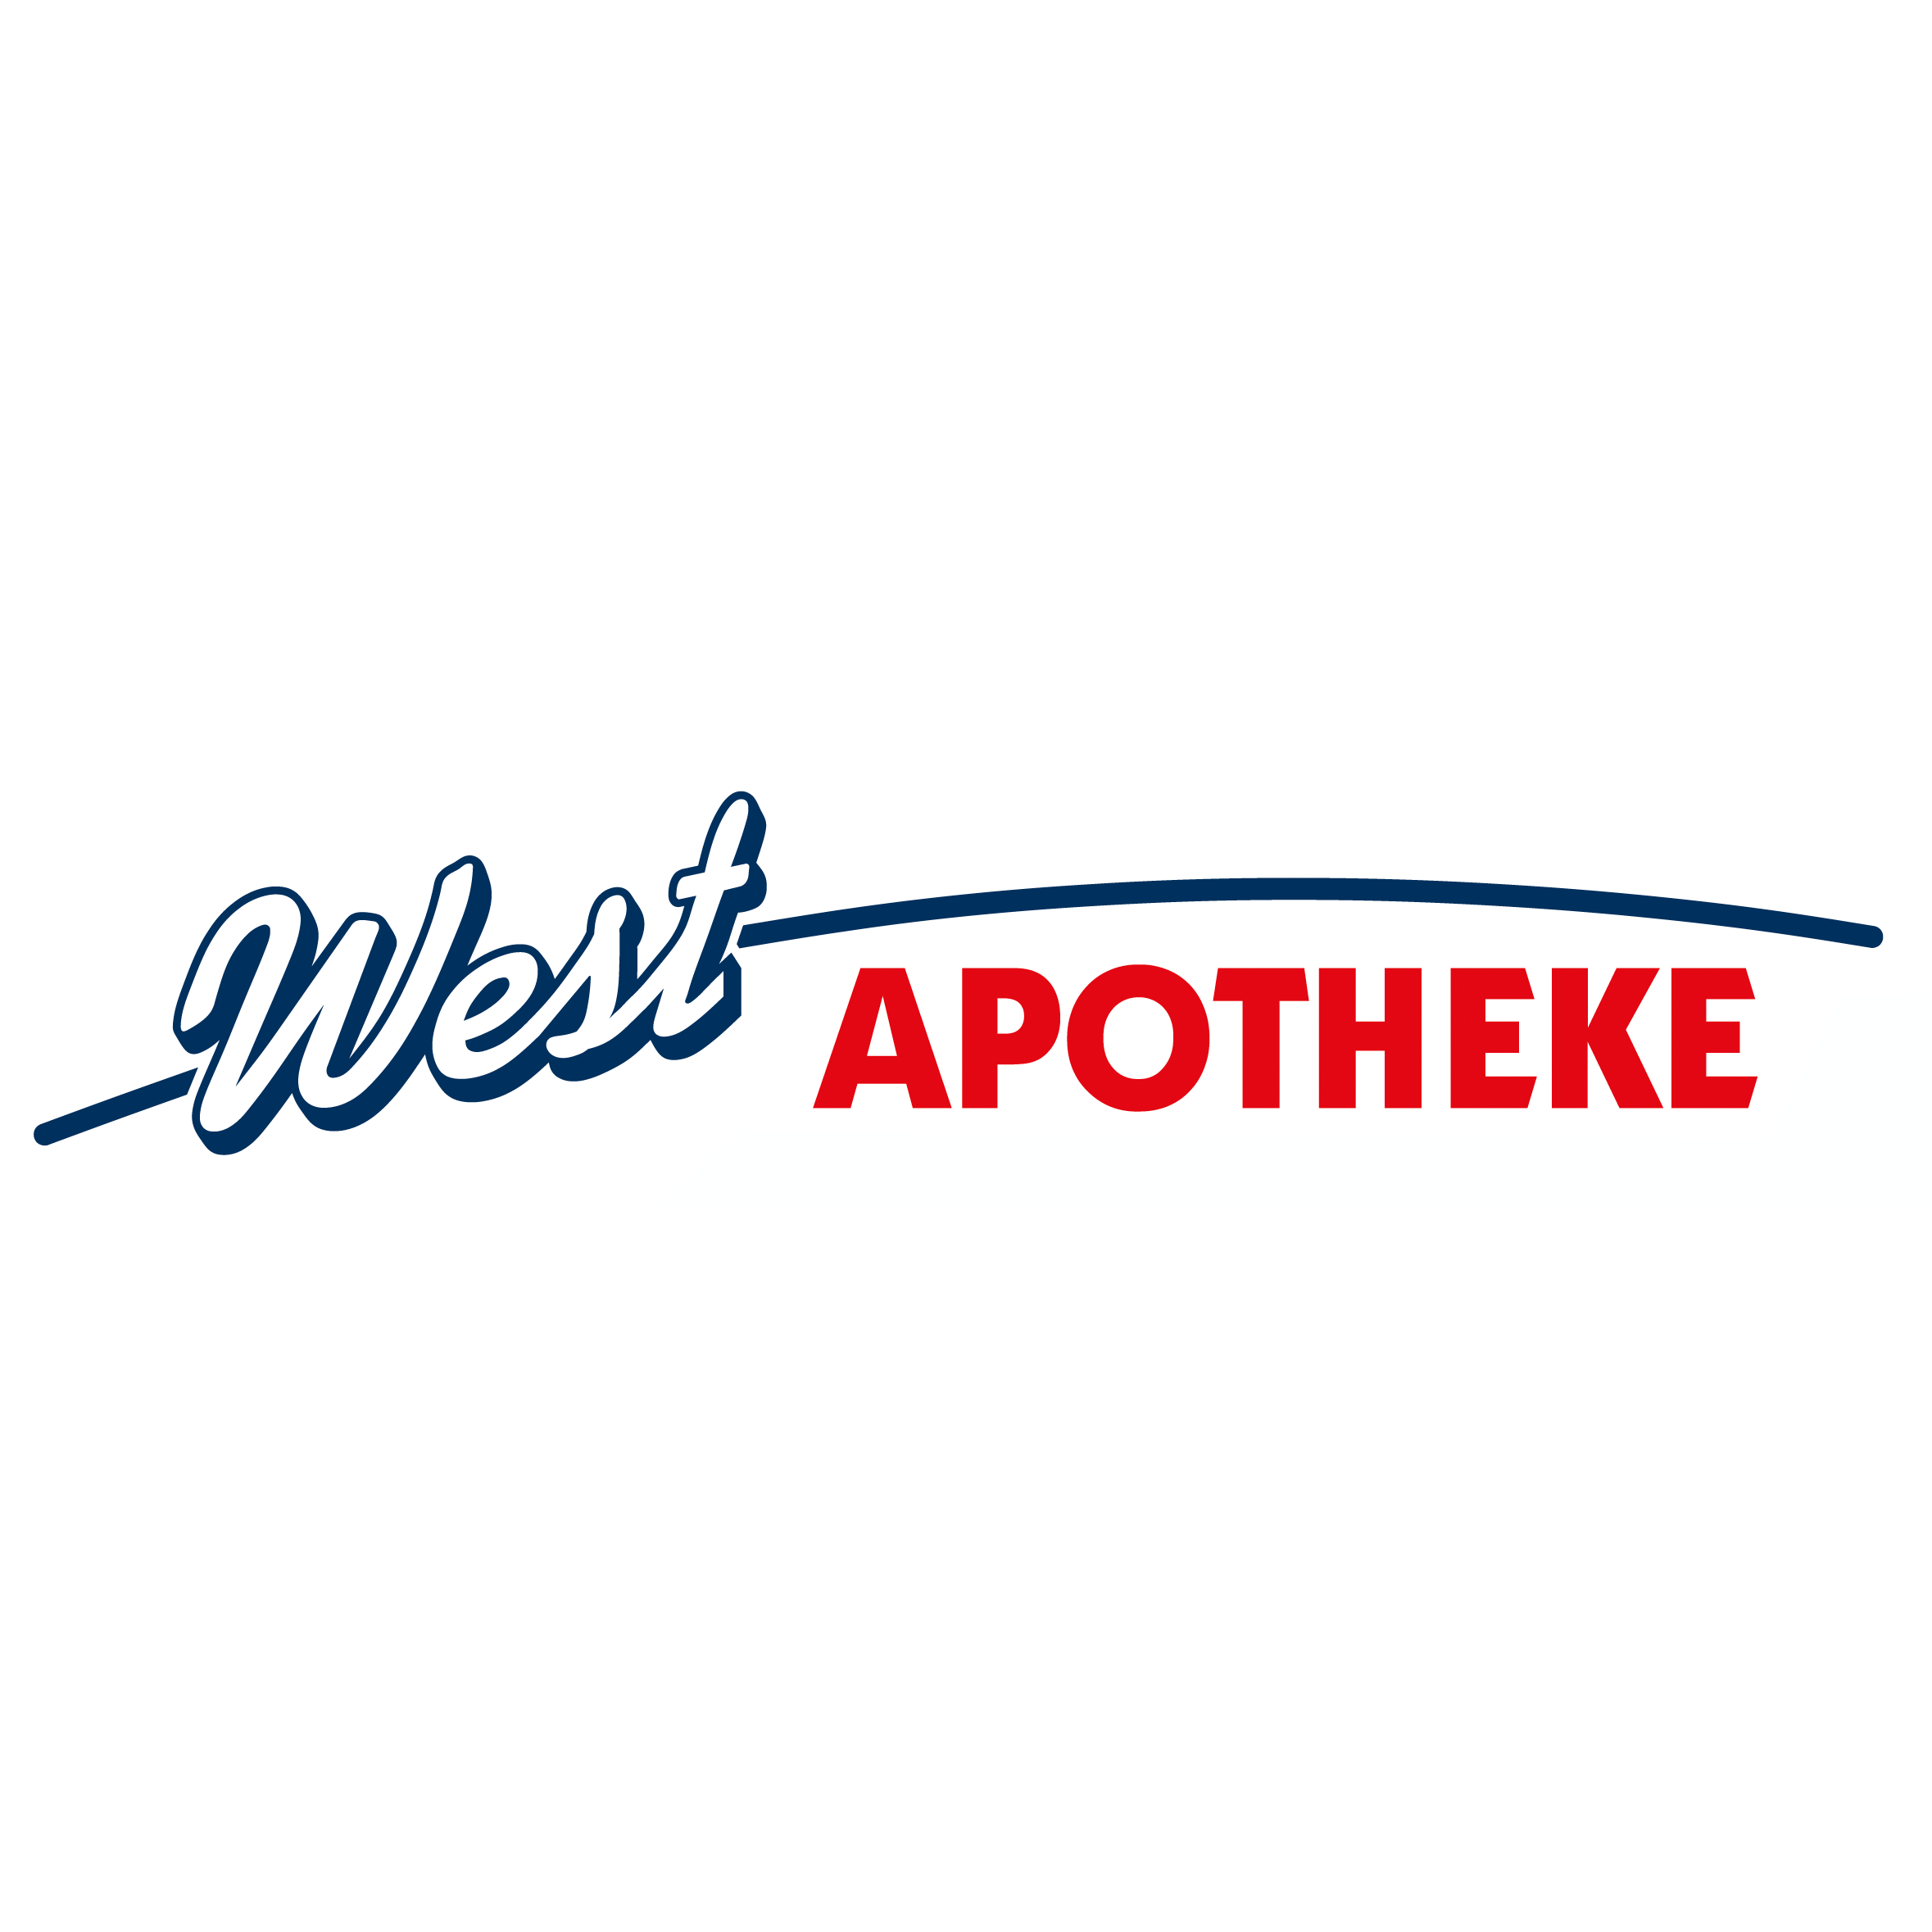 Logo der West-Apotheke